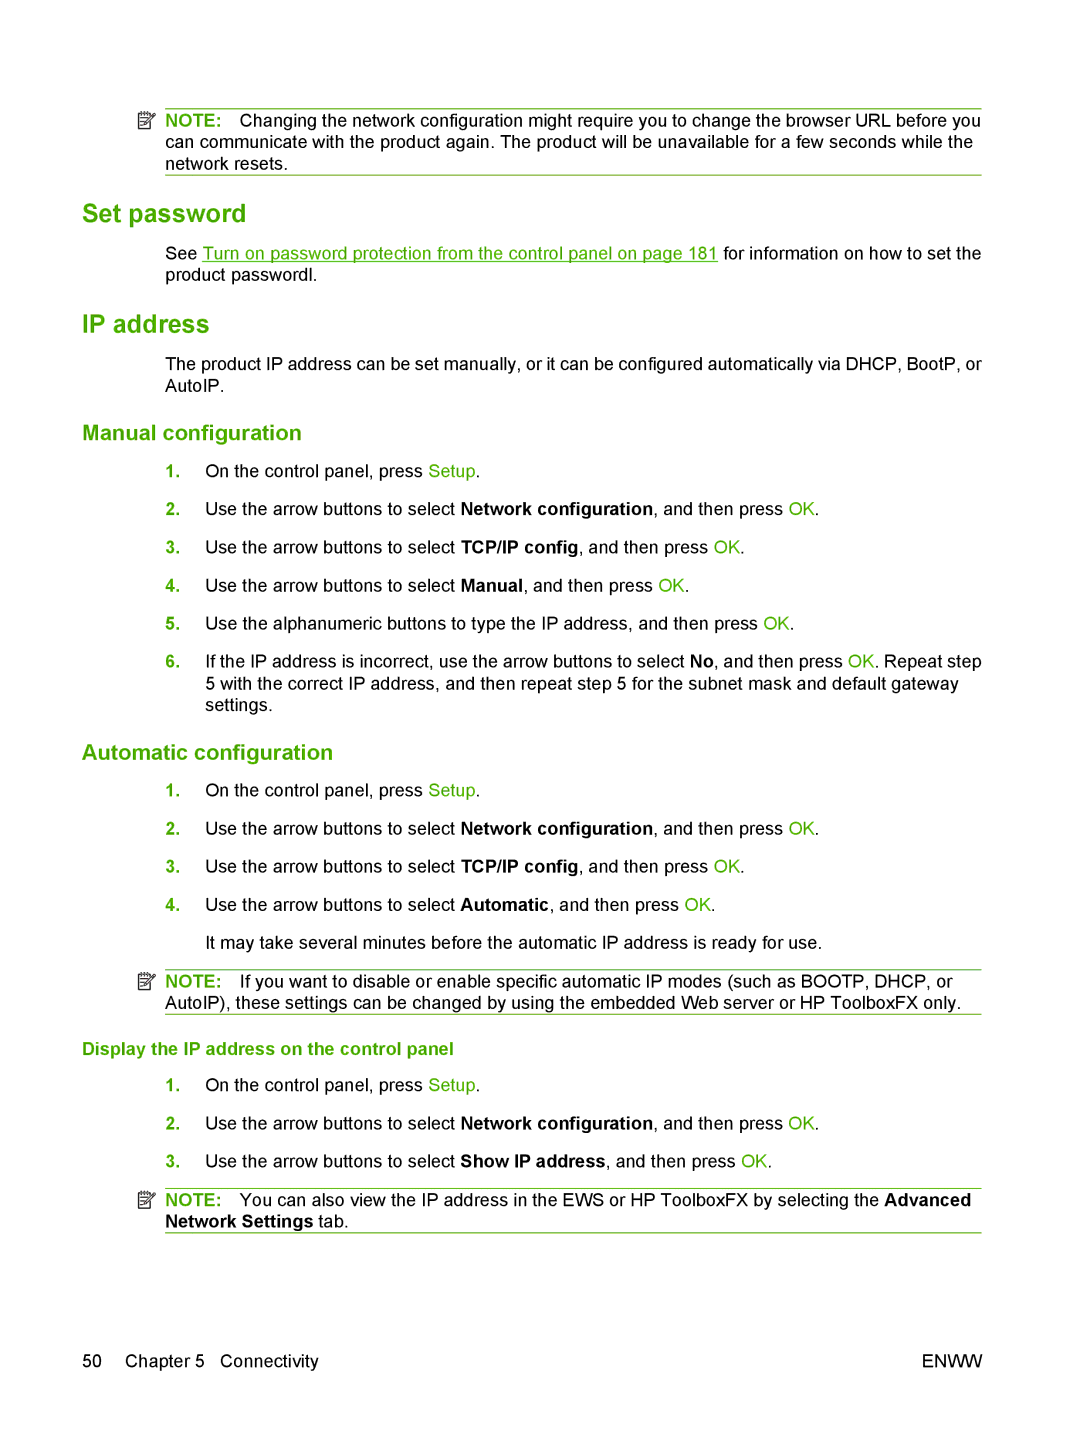 HP CM2320 manual Set password, IP address, Manual configuration, Automatic configuration 